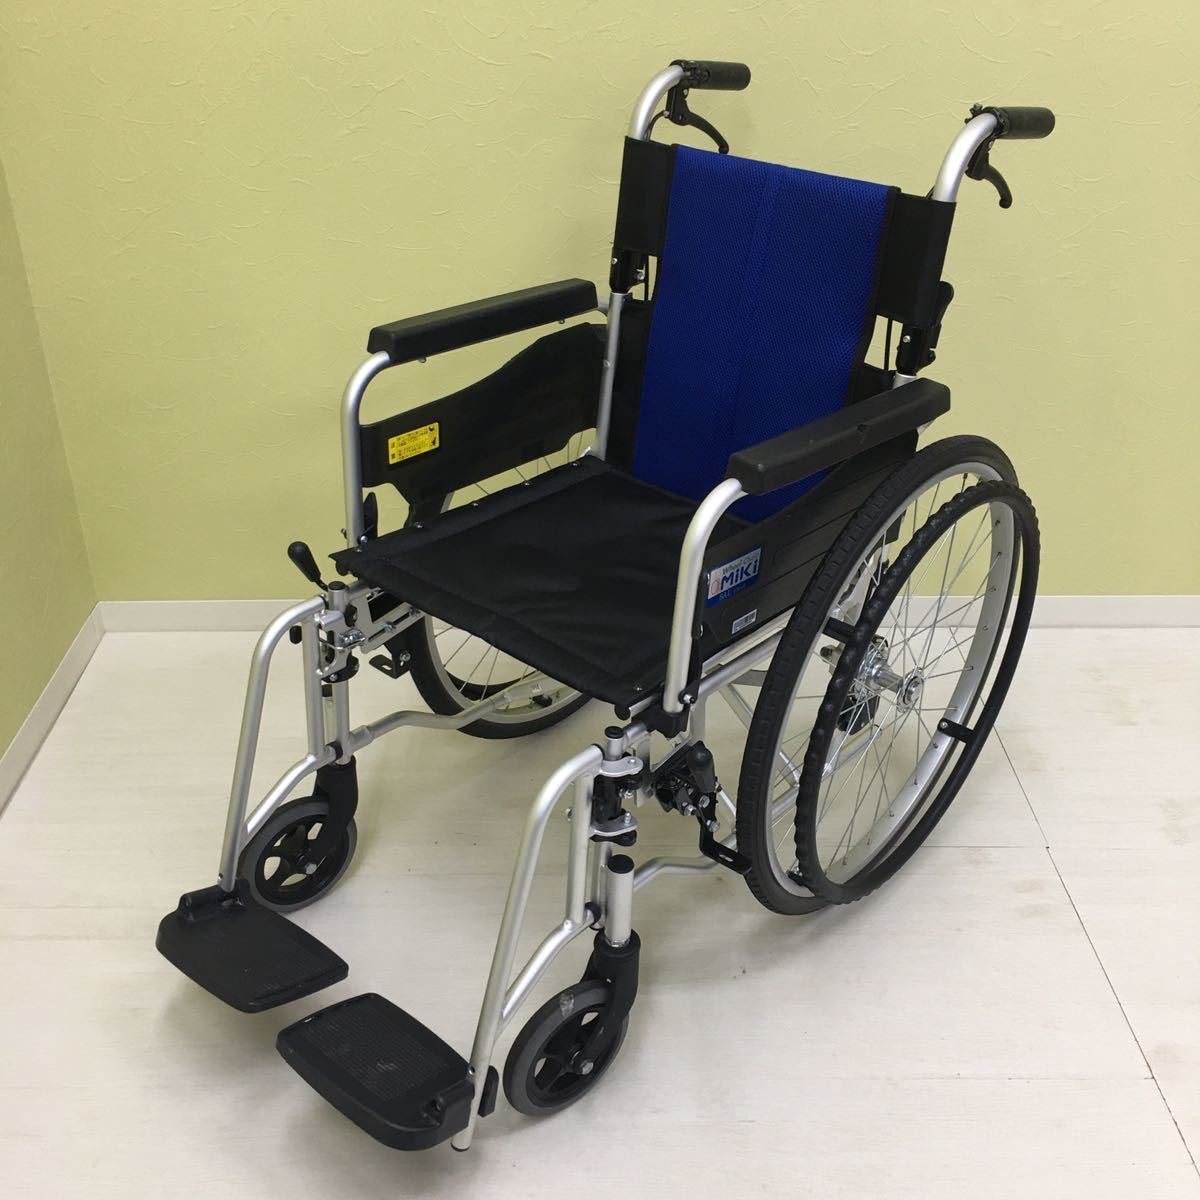 BALシリーズ BAL-9 低座面高さモジュール 自走介助兼用車椅子 ミキ